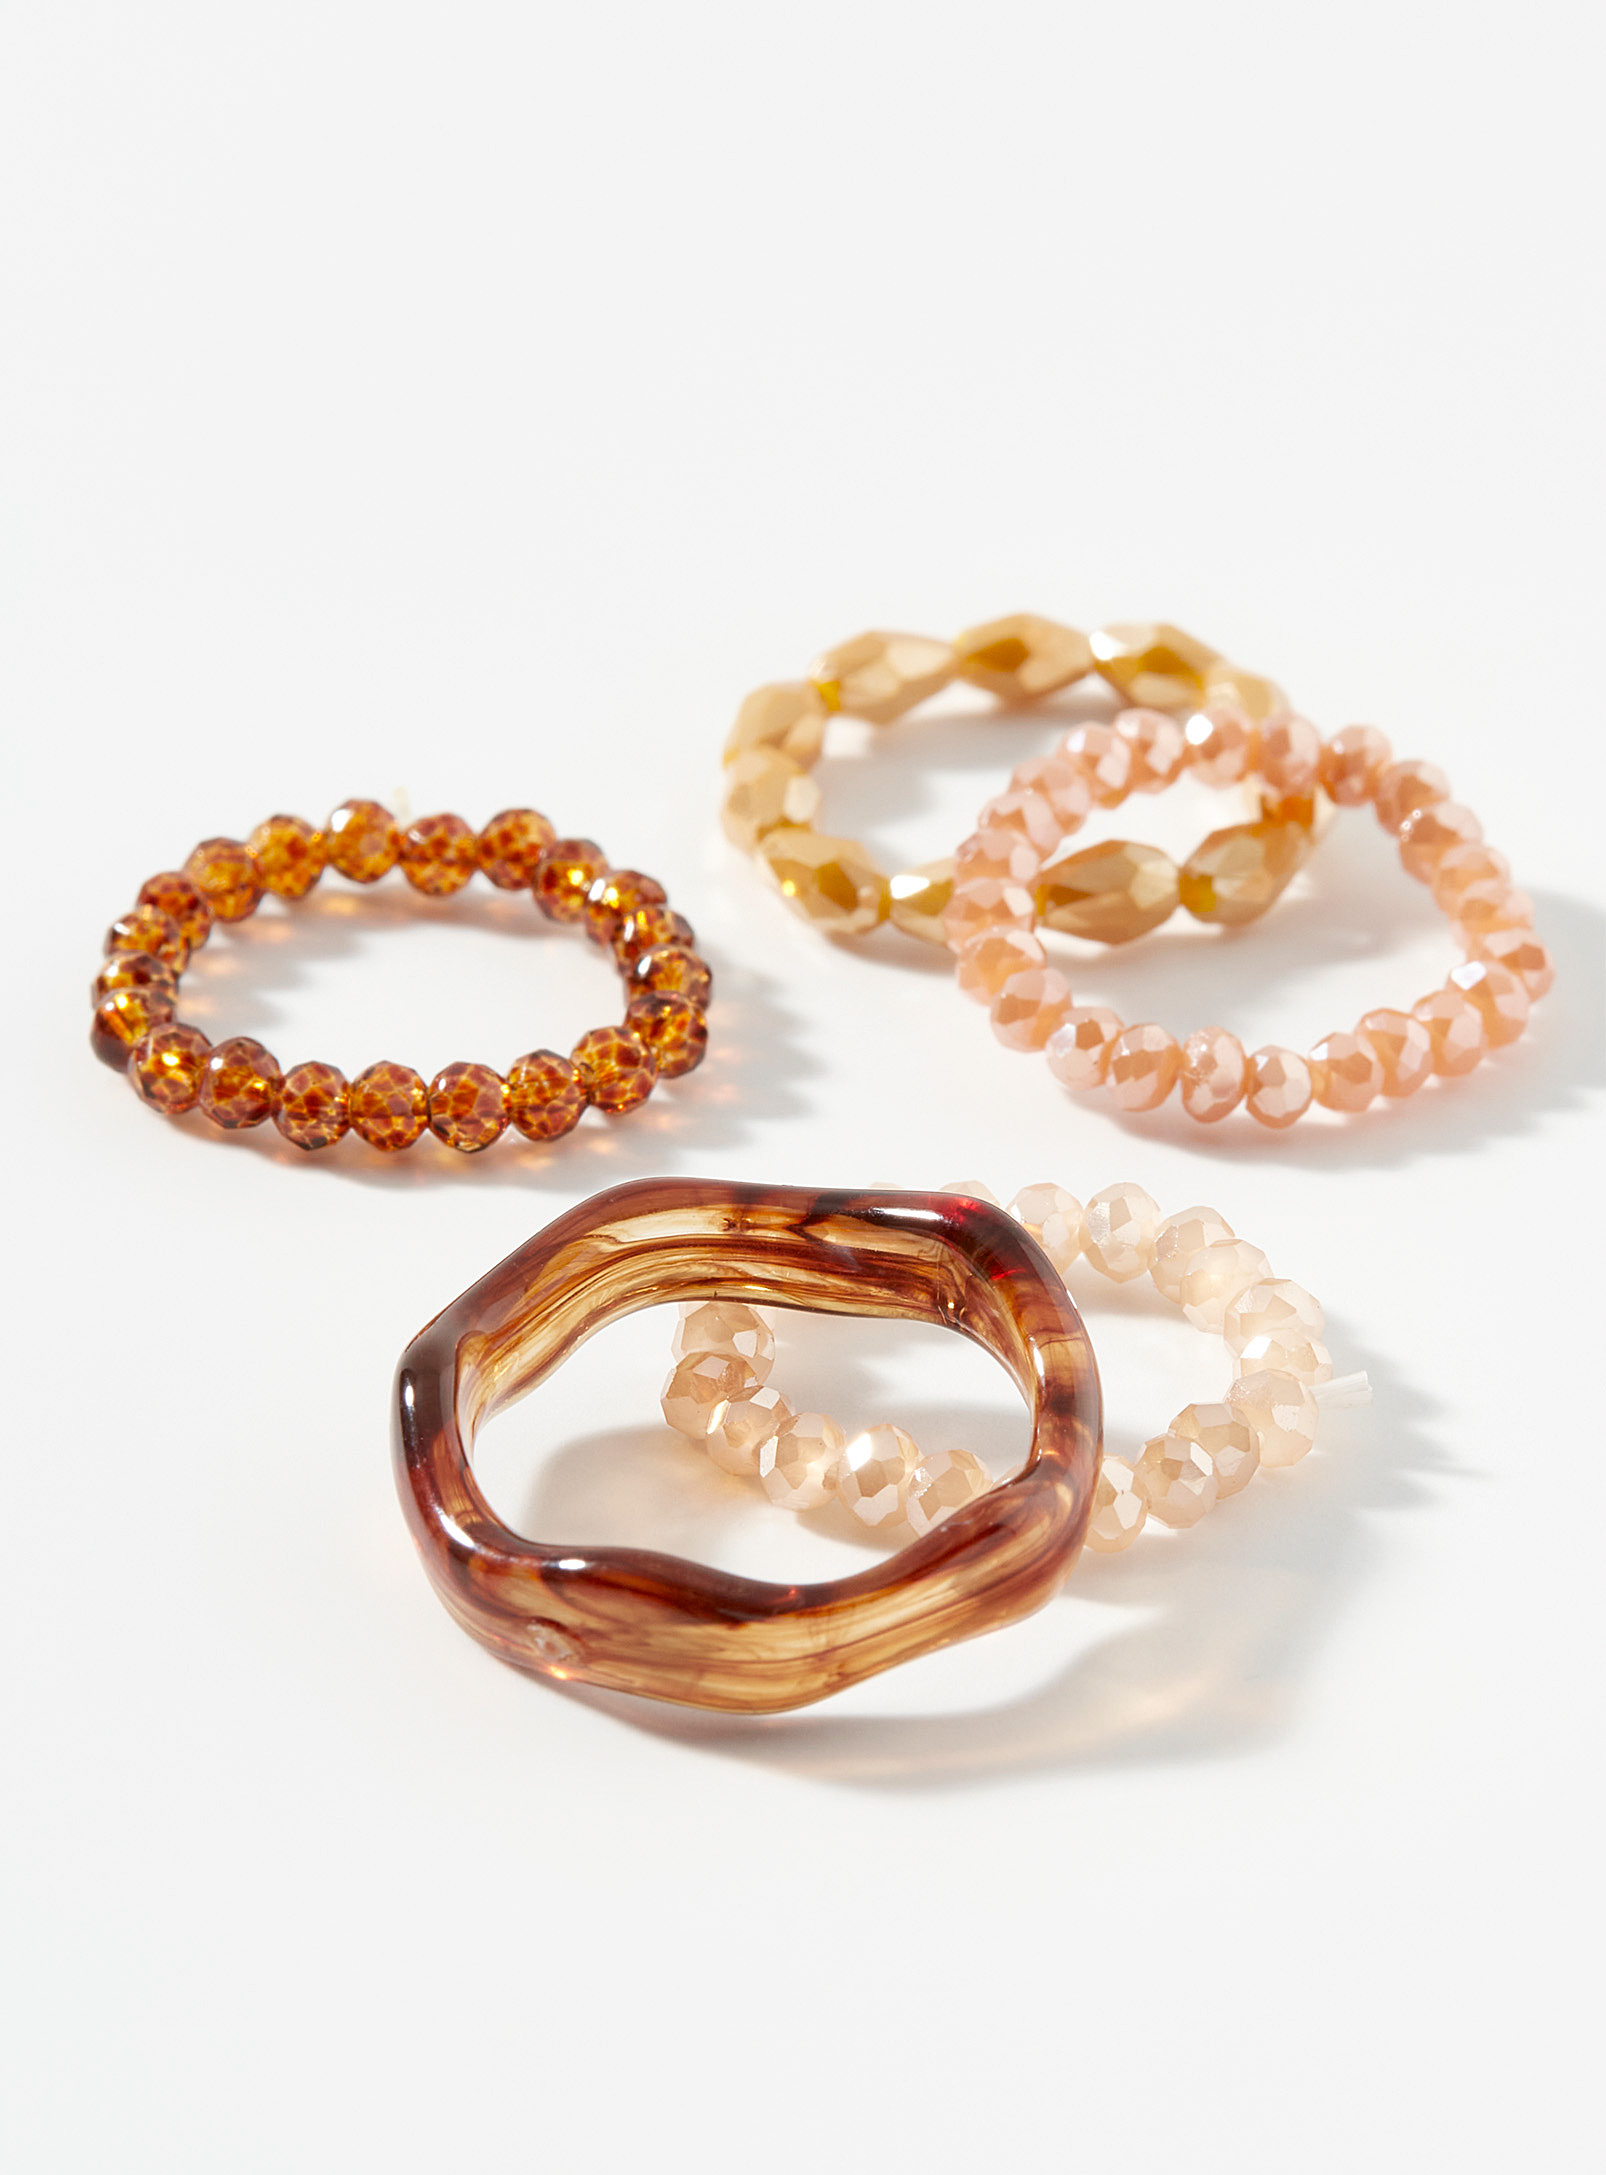 Simons - Women's Natural hue rings Set of 5